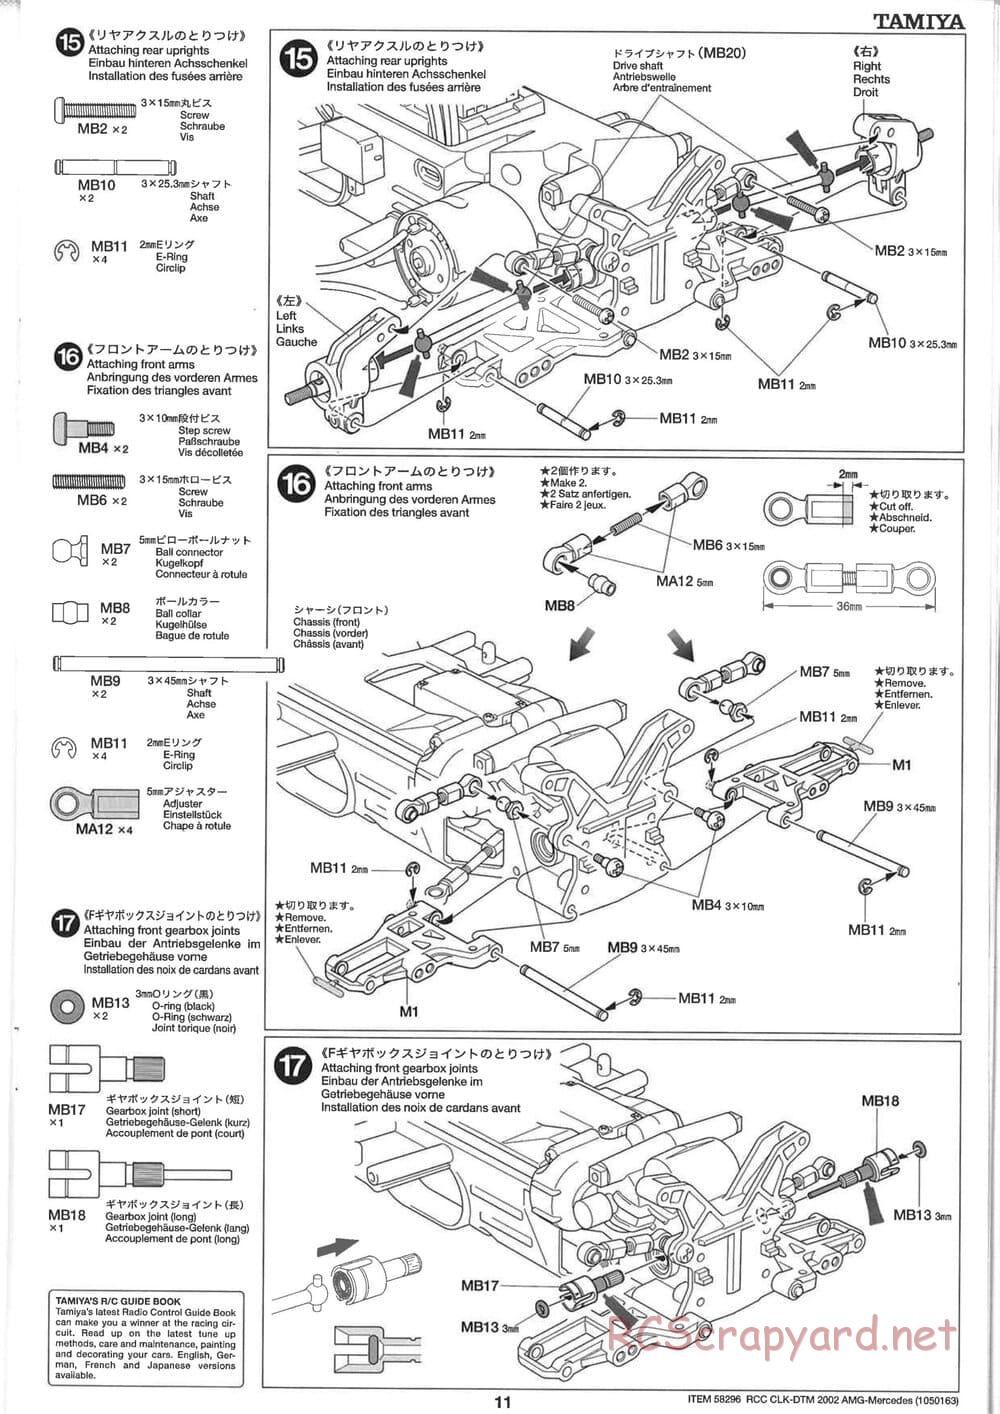 Tamiya - CLK DTM 2002 AMG Mercedes - TL-01 LA Chassis - Manual - Page 11